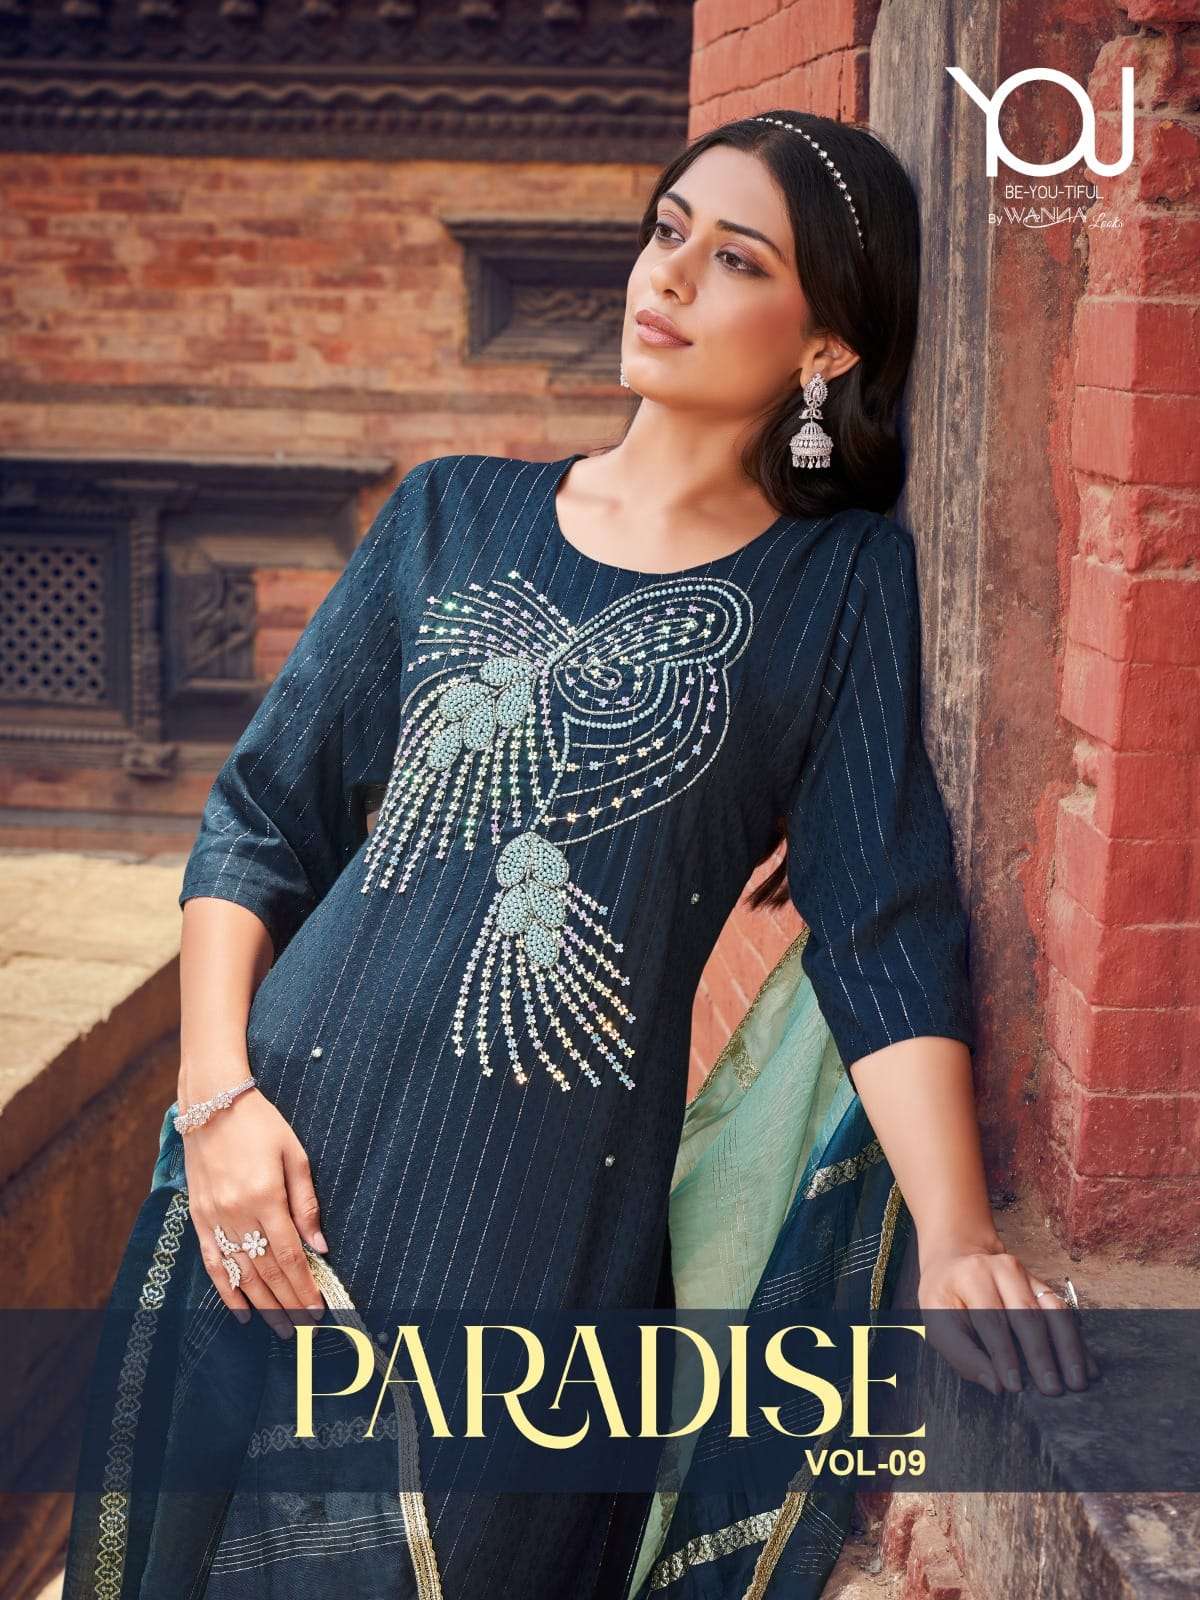 wanna paradise vol-9 1201-1206 series latest designer kurti set wholesaler surat gujarat